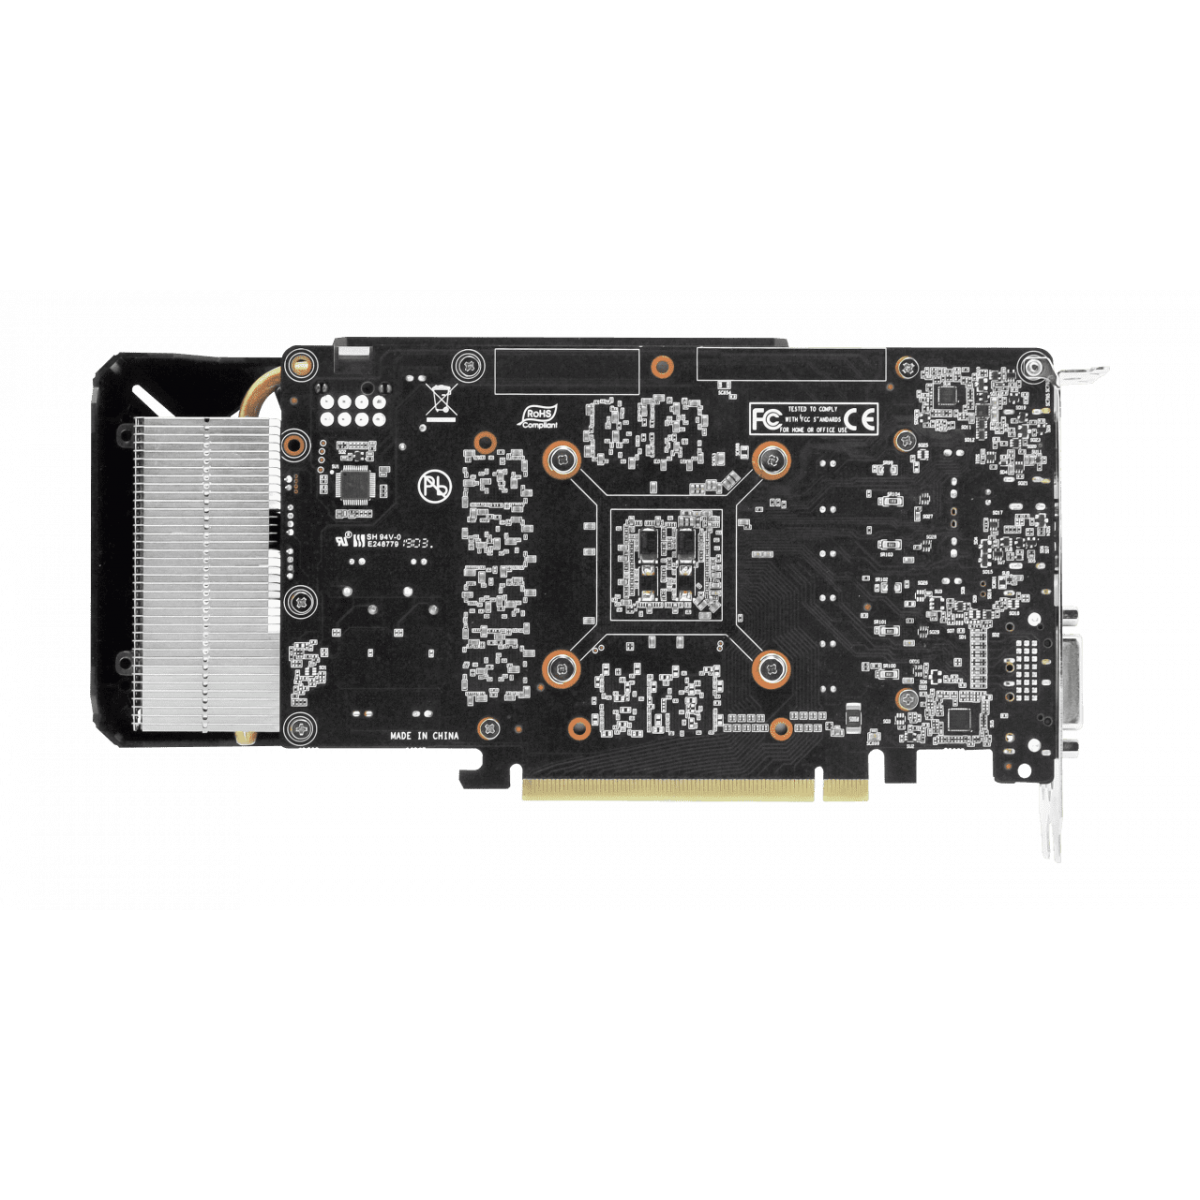 VGA Palit GeForce RTX2060 Dual